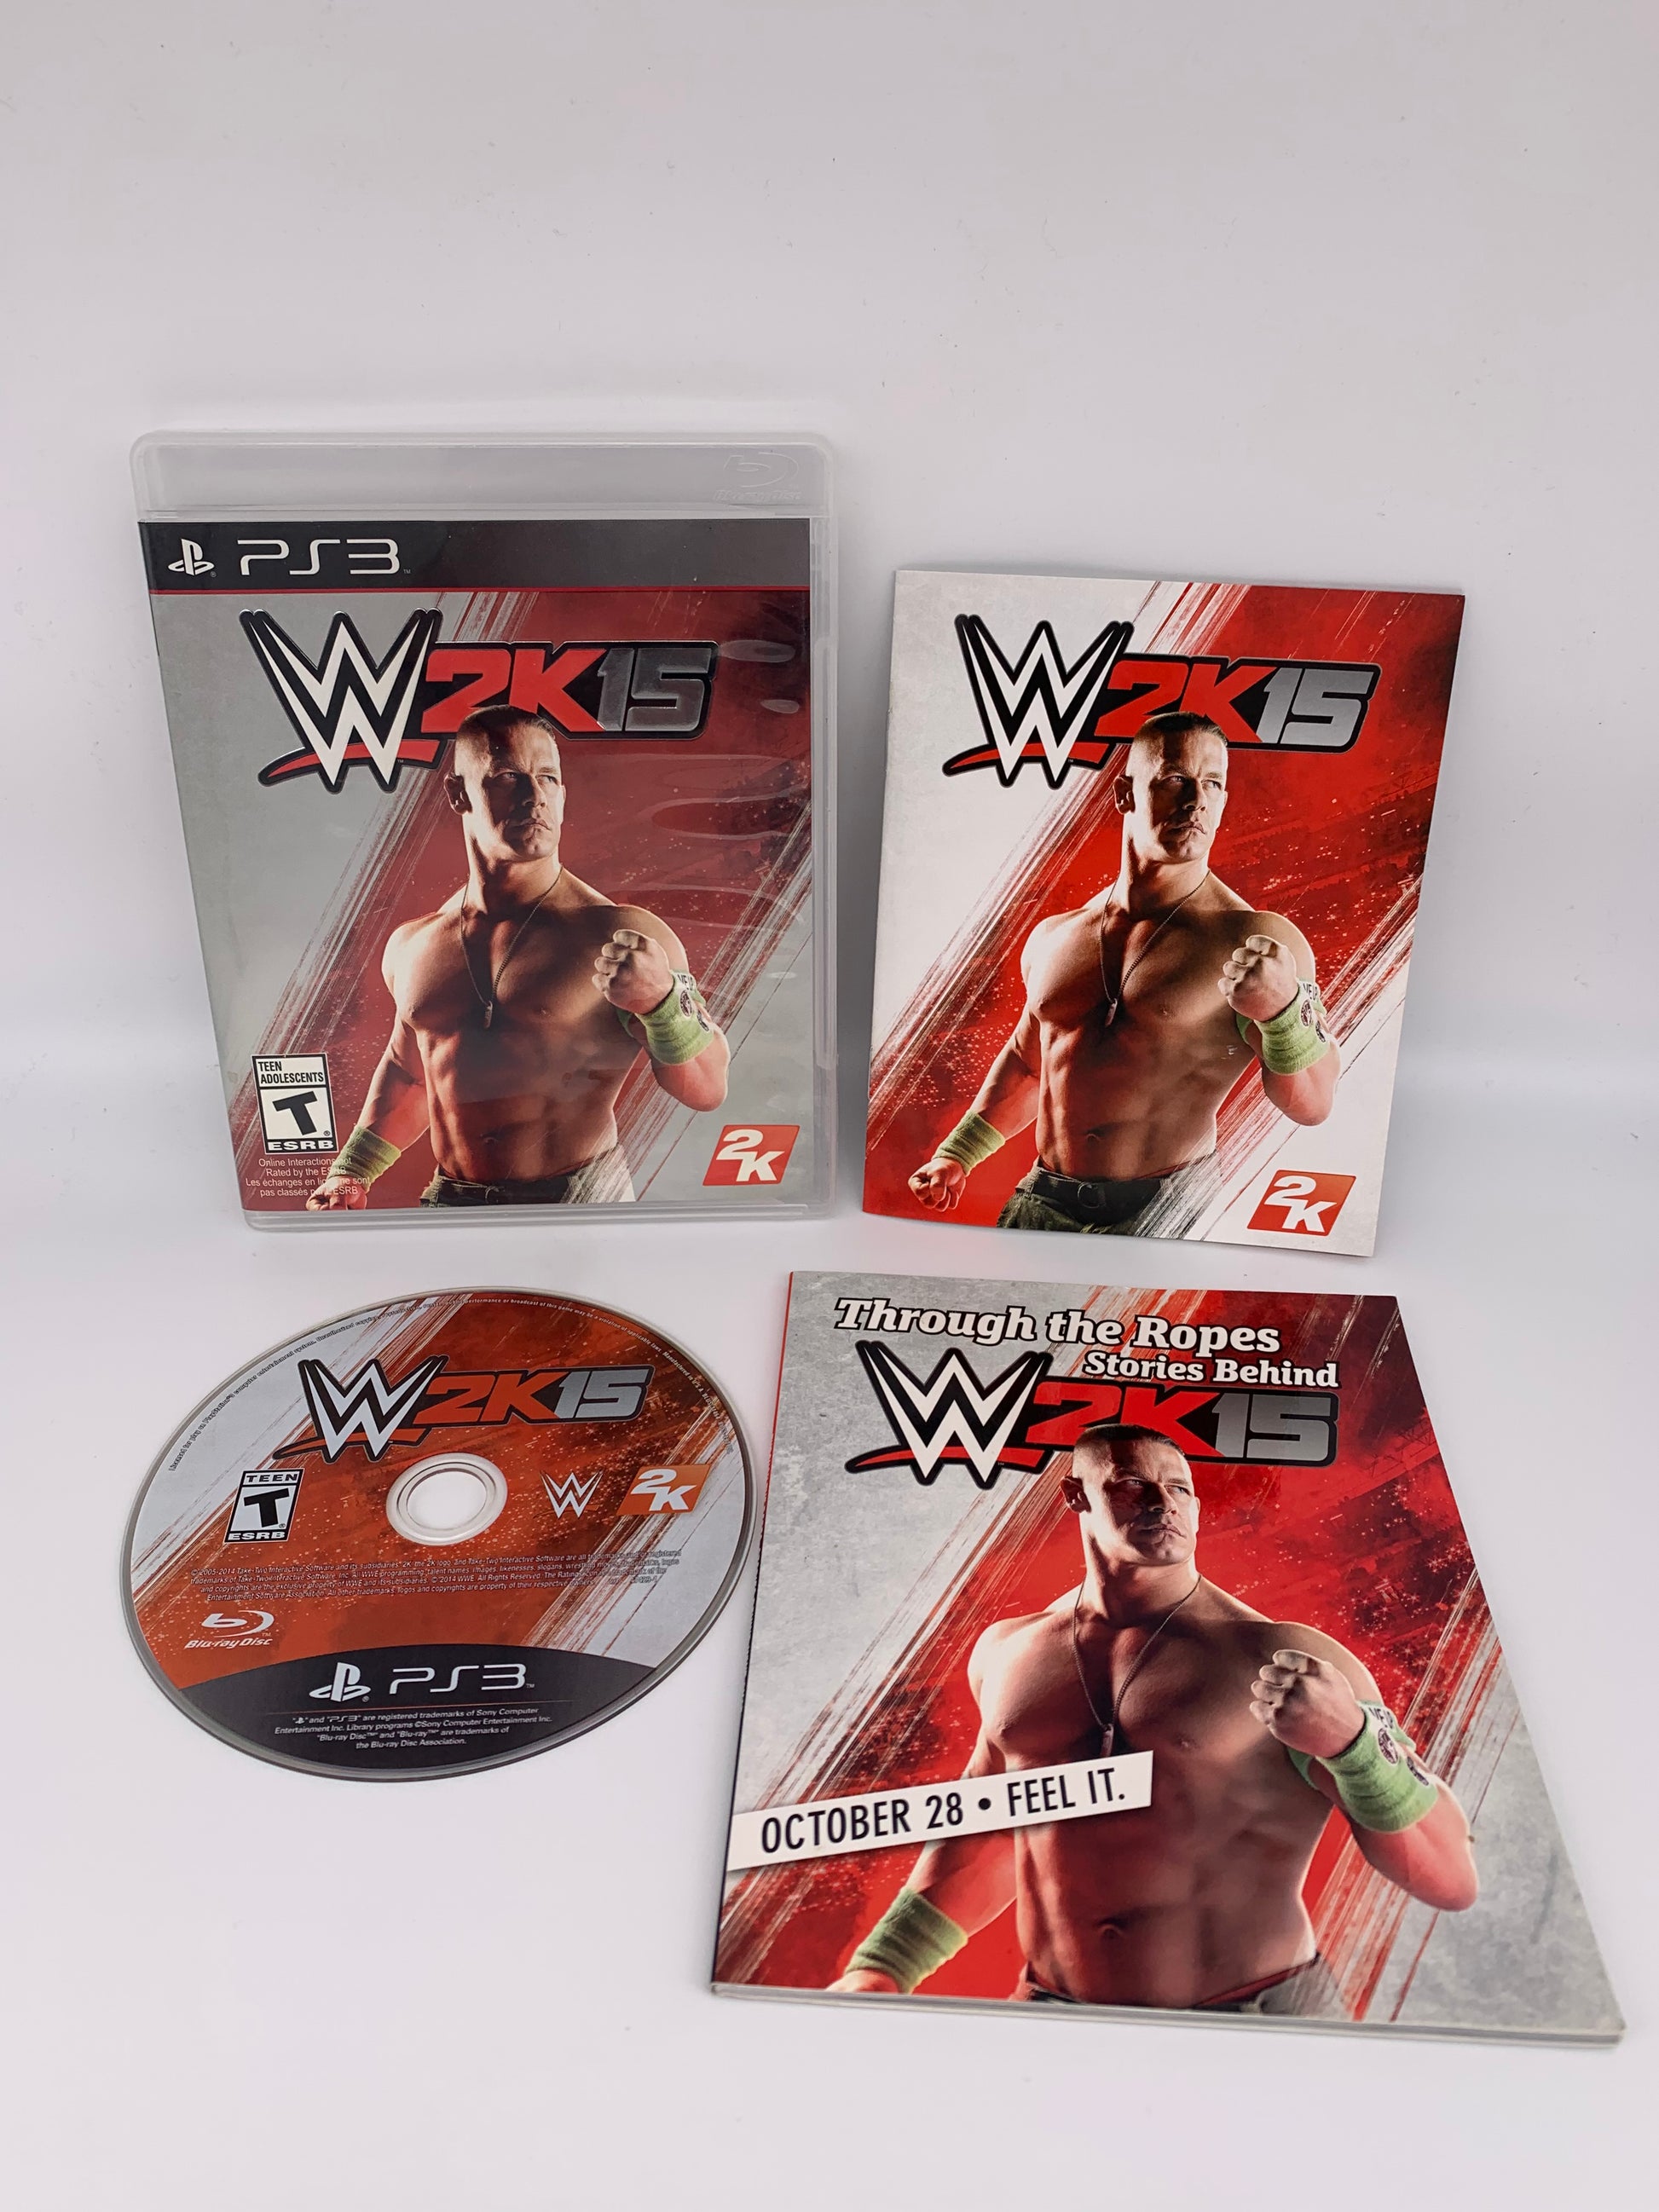 PiXEL-RETRO.COM : SONY PLAYSTATION 3 (PS3) COMPLET CIB BOX MANUAL GAME NTSC WWE 2K15